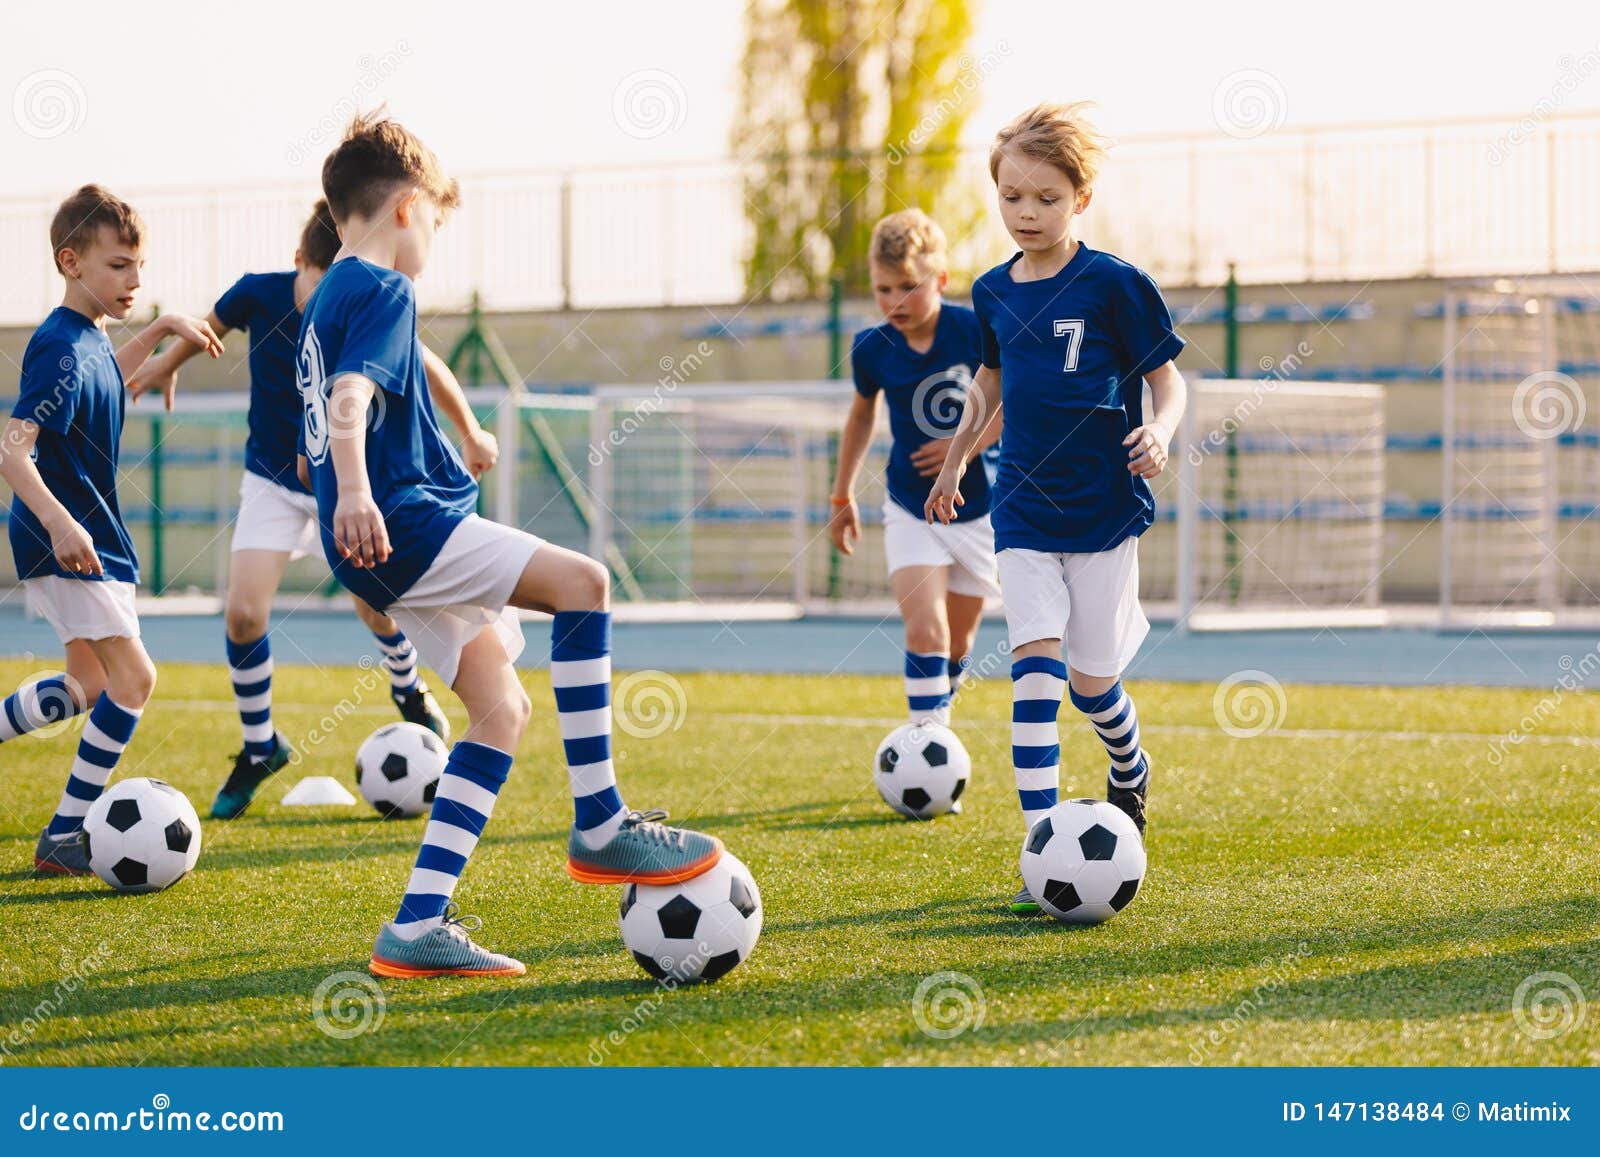 Young Boys in Sports Club on Soccer Football Training. Les enfants